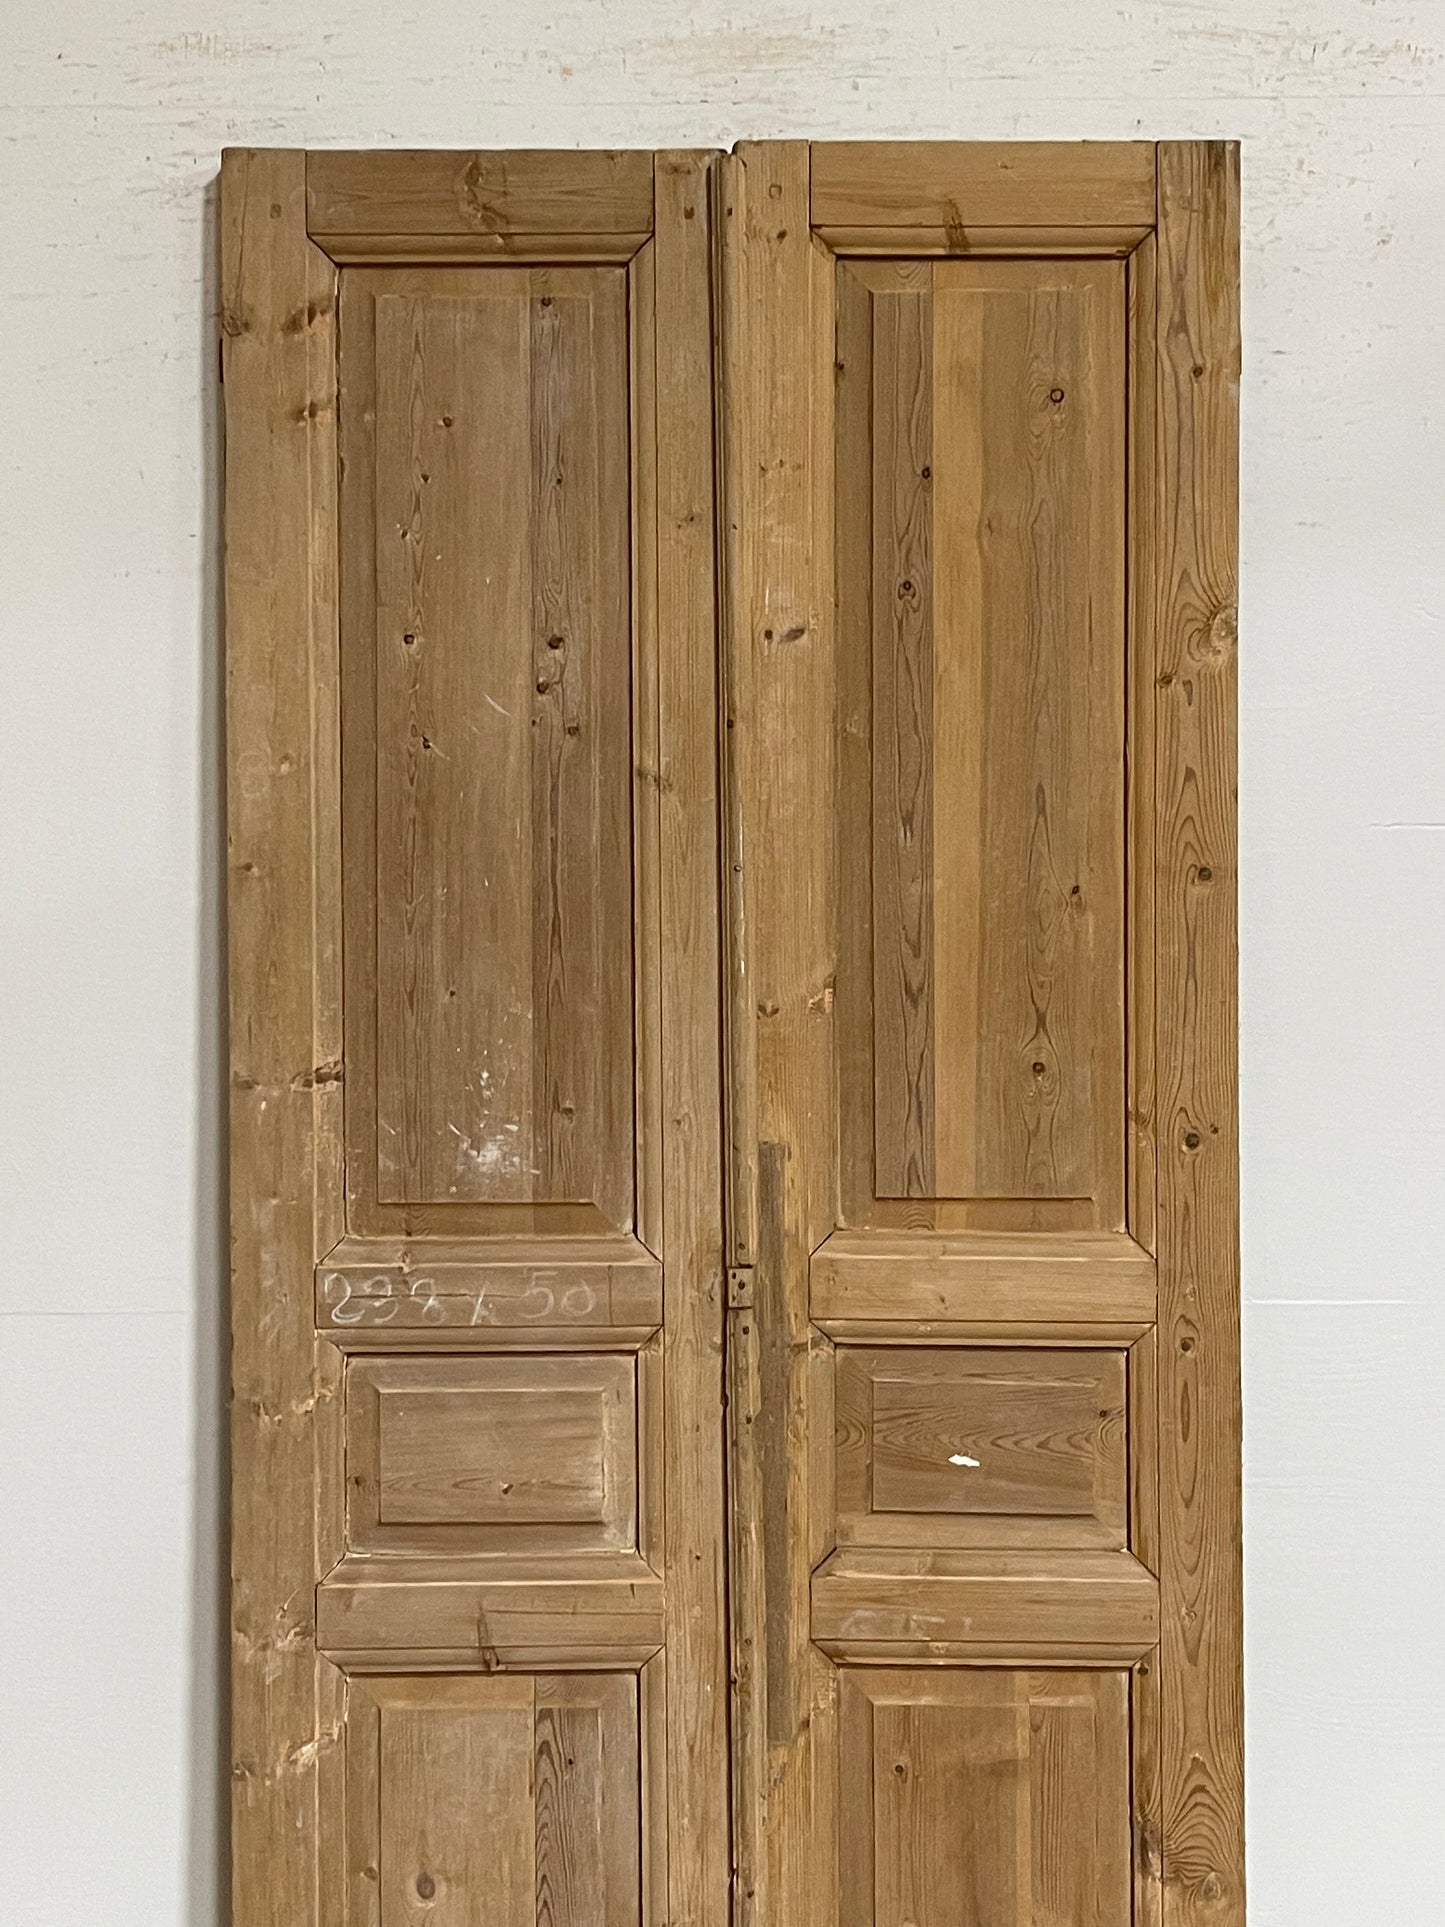 Antique French panel doors (93.75x39.5) G0199s